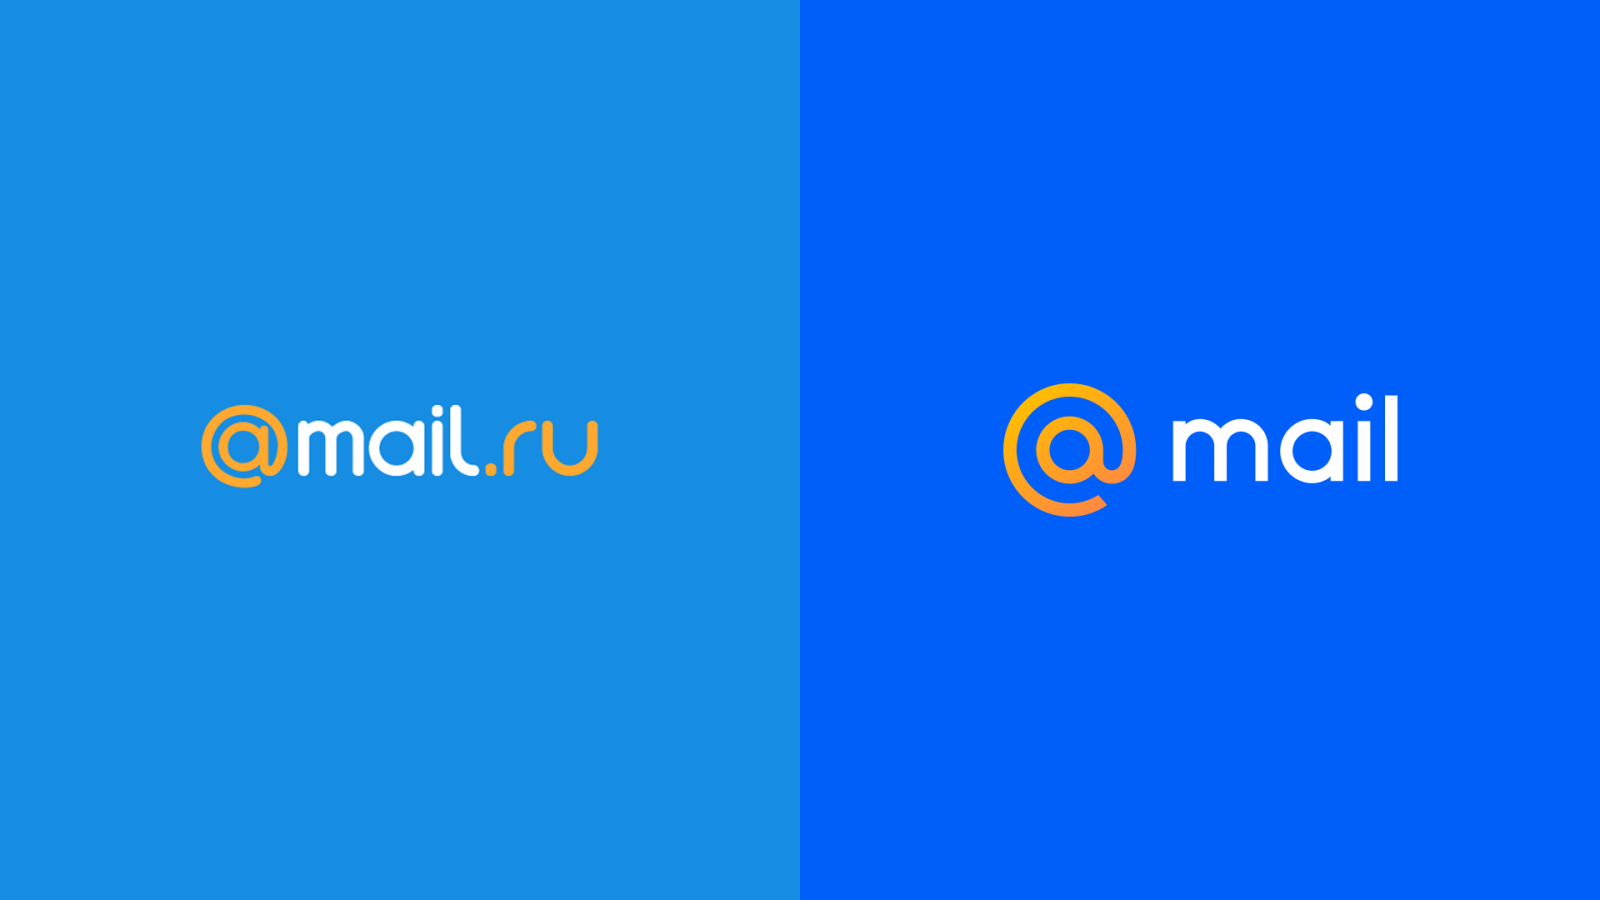 Think mail ru. Mail. Почта майл. Mail.ru лого. Логотип почты мейл.